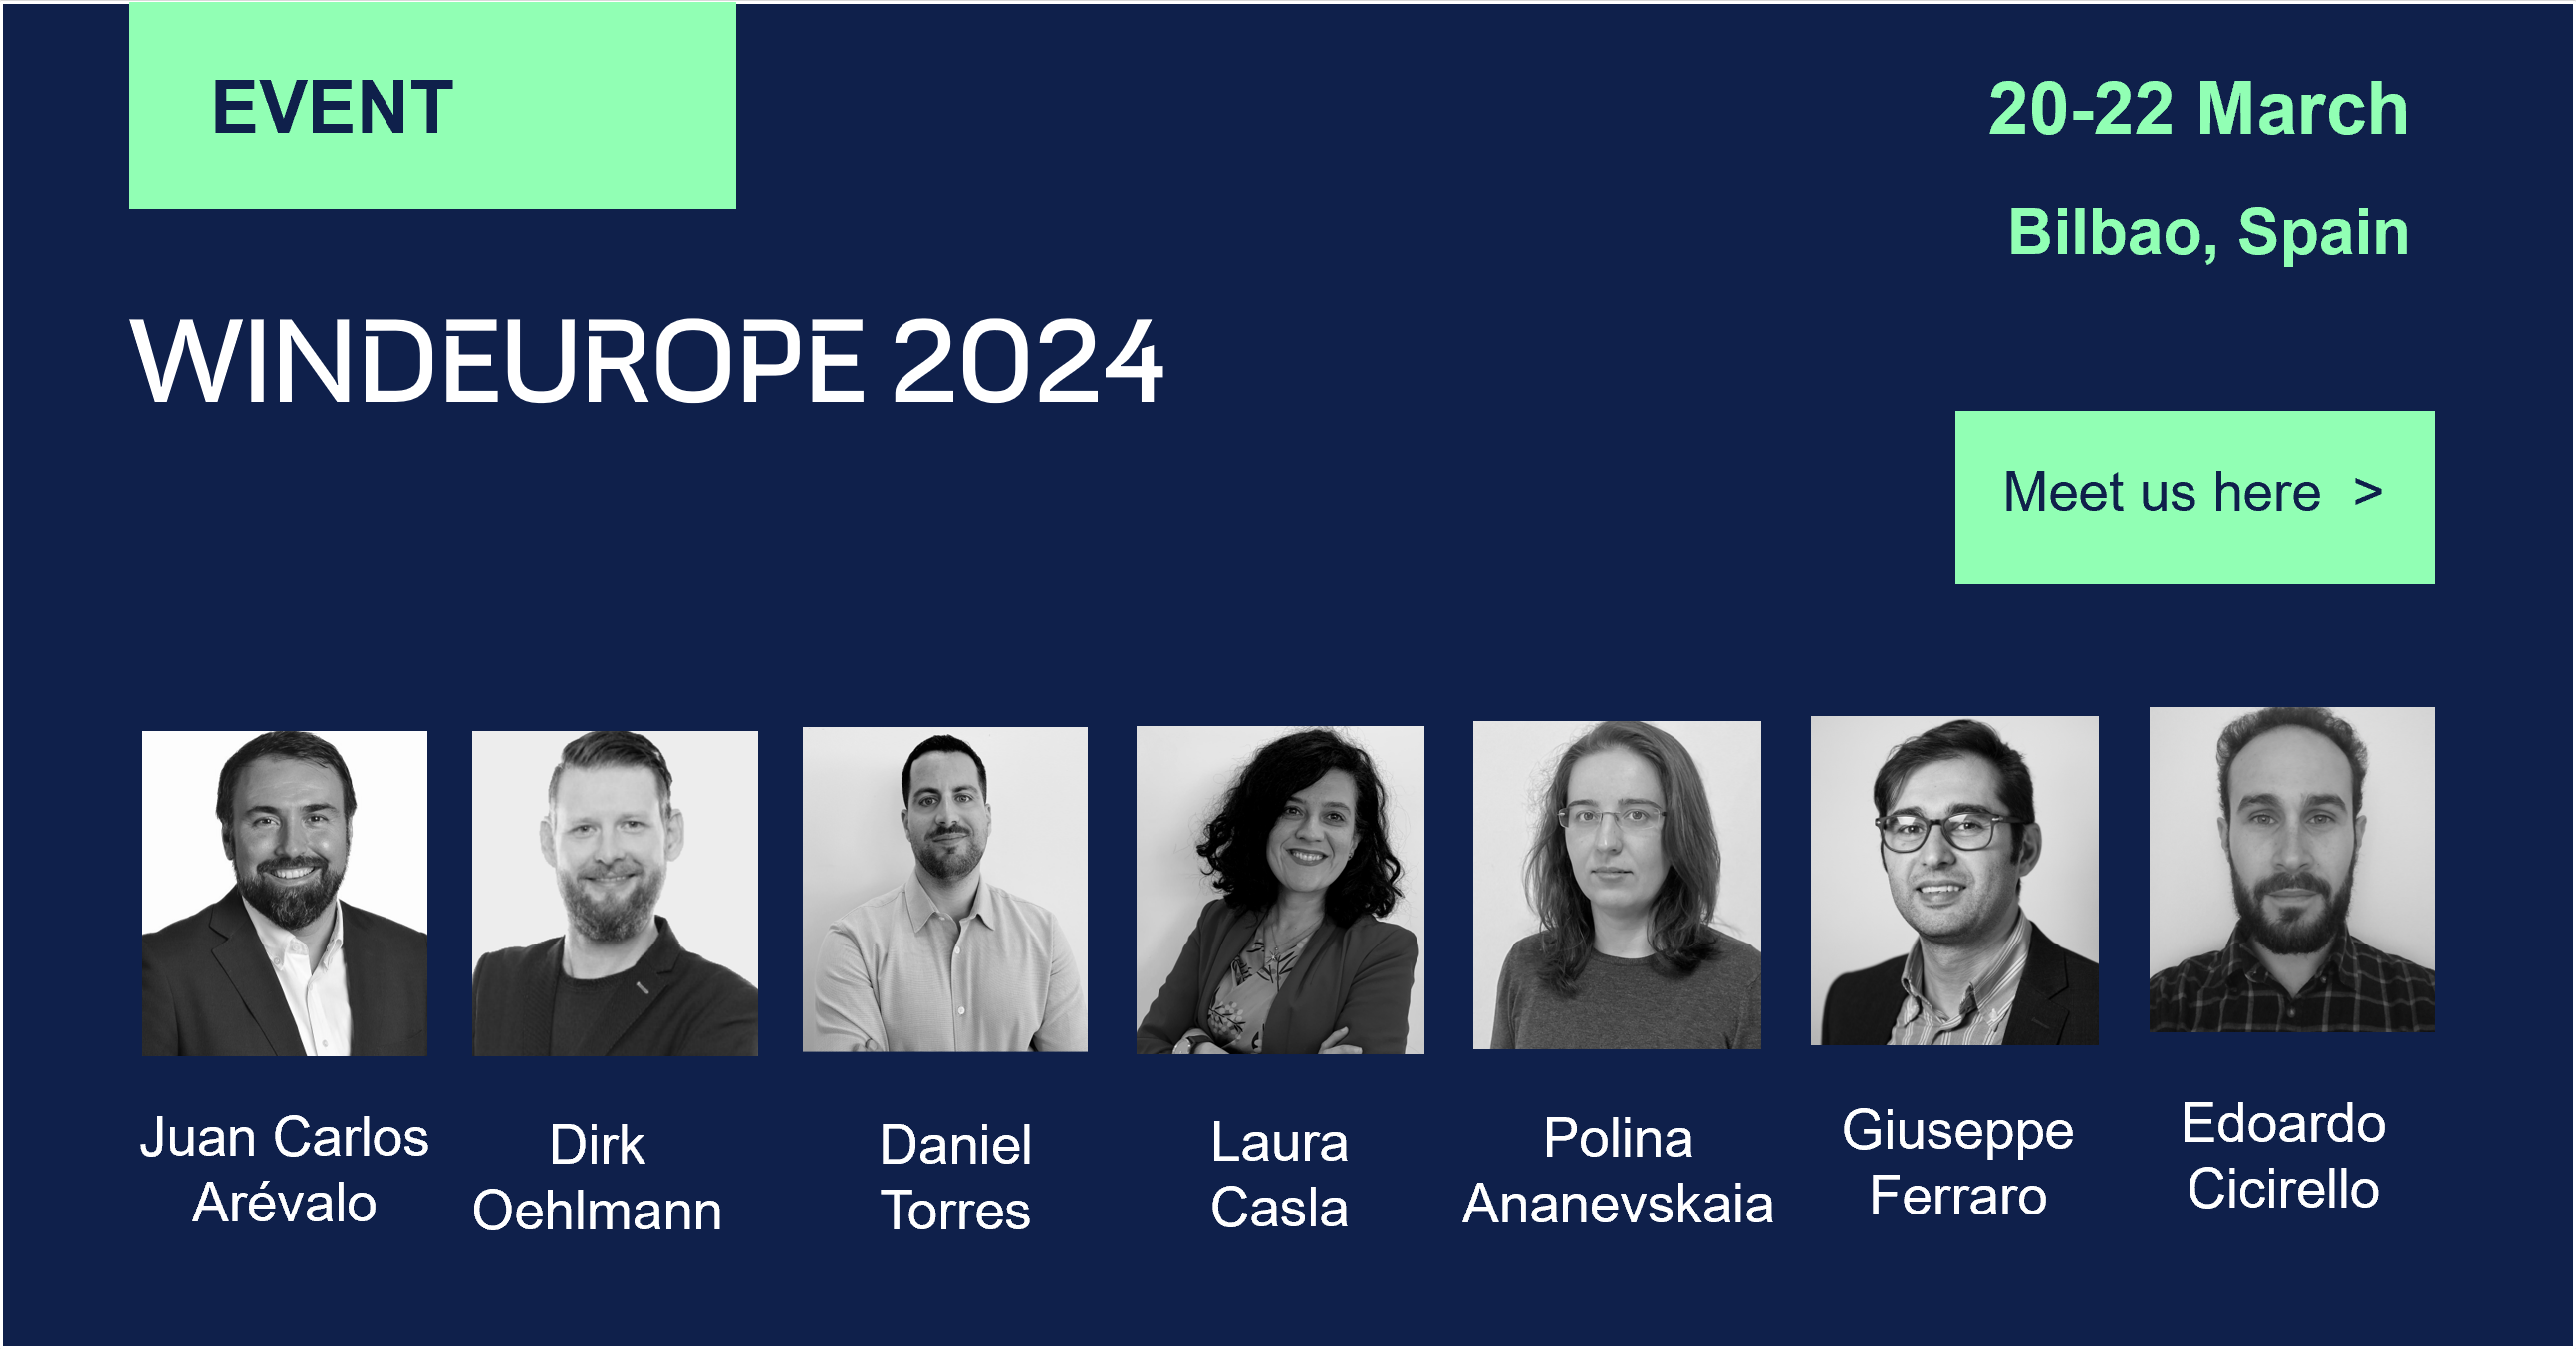 GreenPowerMonitor will attend WindEurope 2024 in Bilbao, Spain